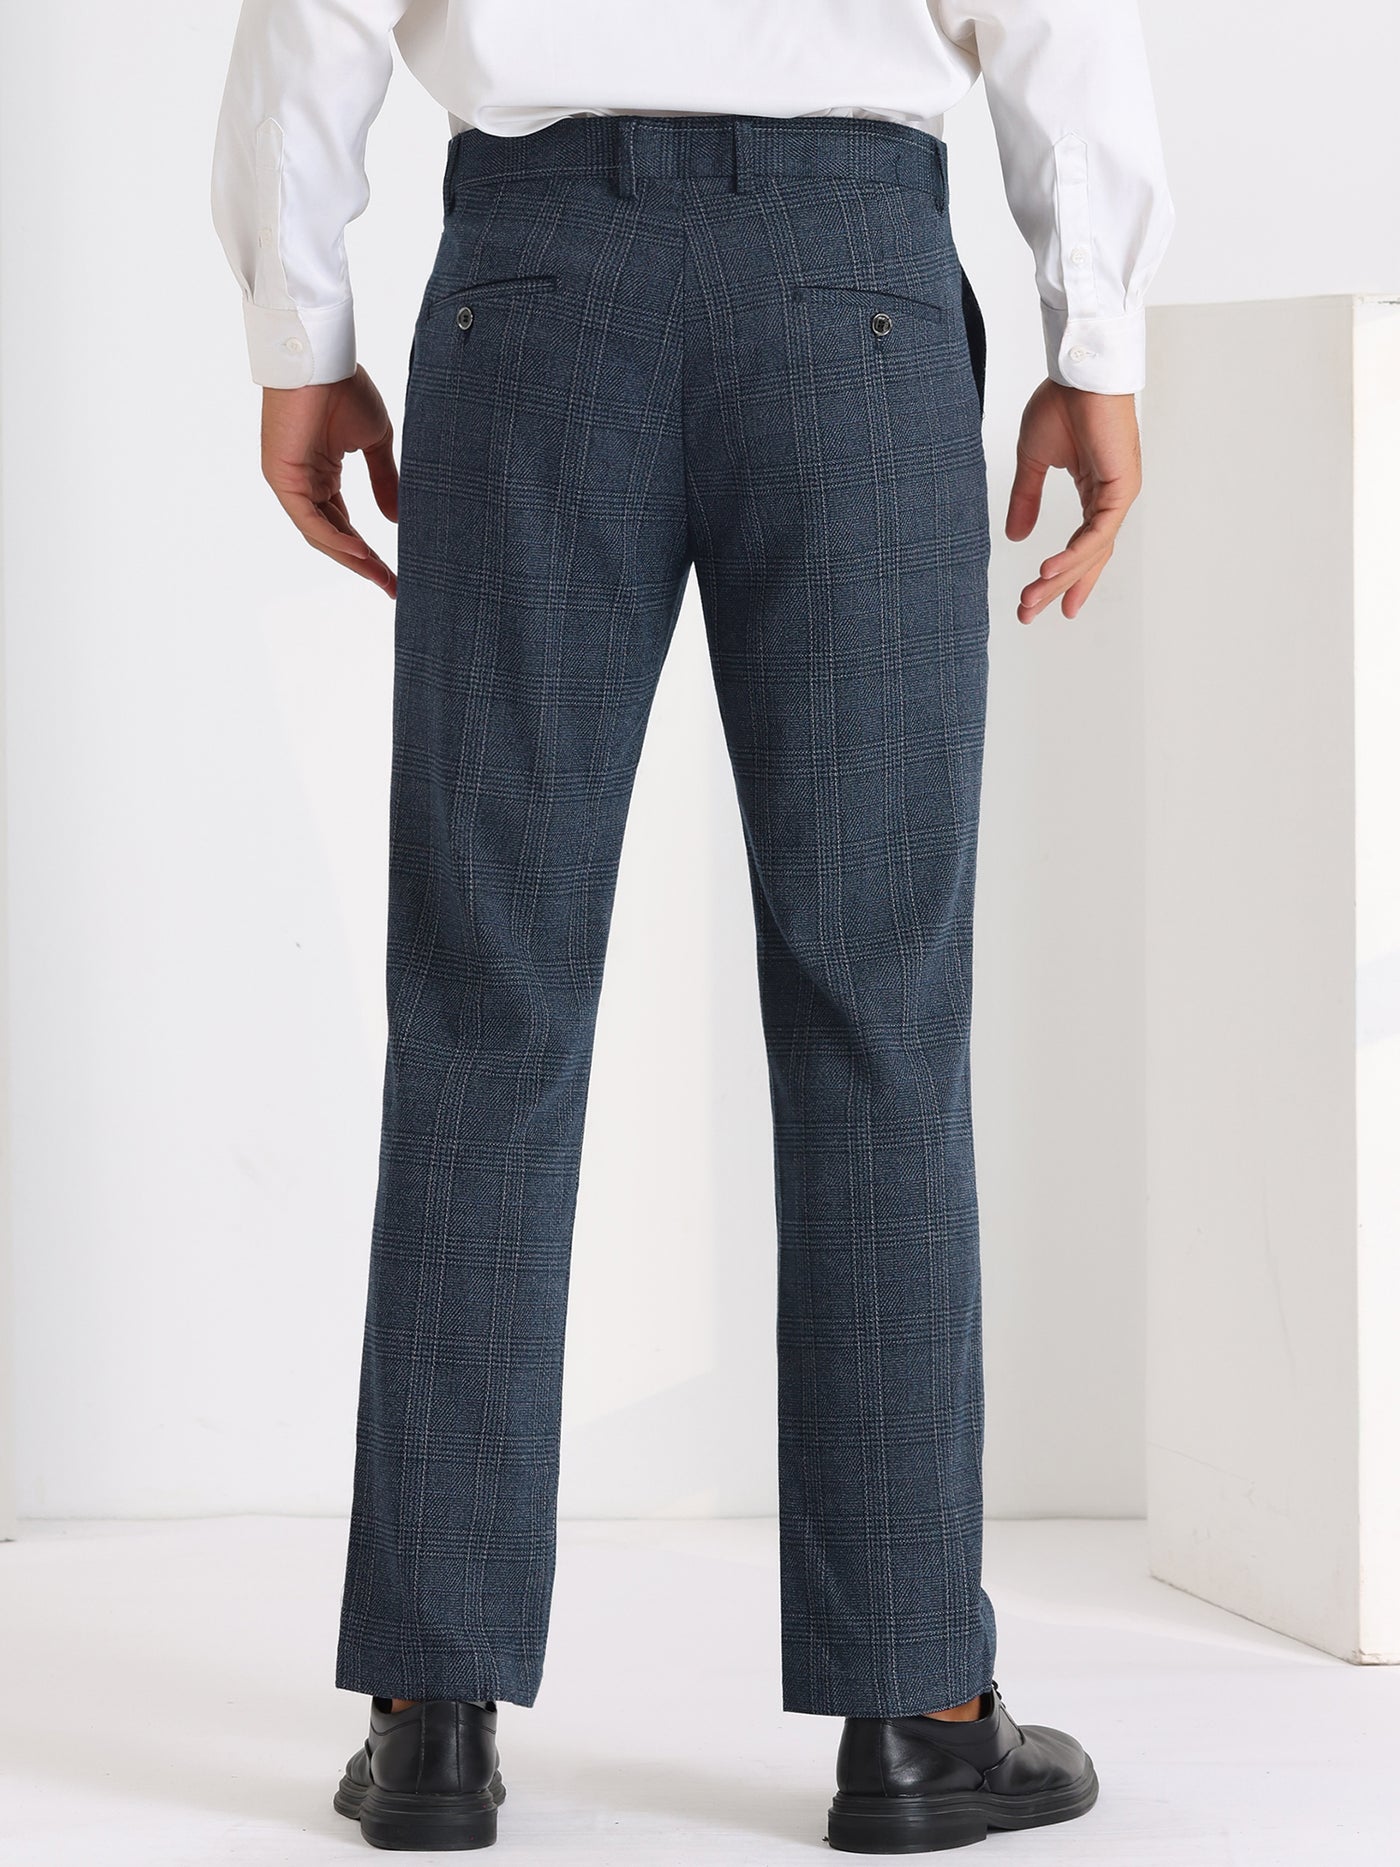 Bublédon Dress Plaid Pants for Men's Slim Fit Wedding Tartan Patterned Chino Trousers